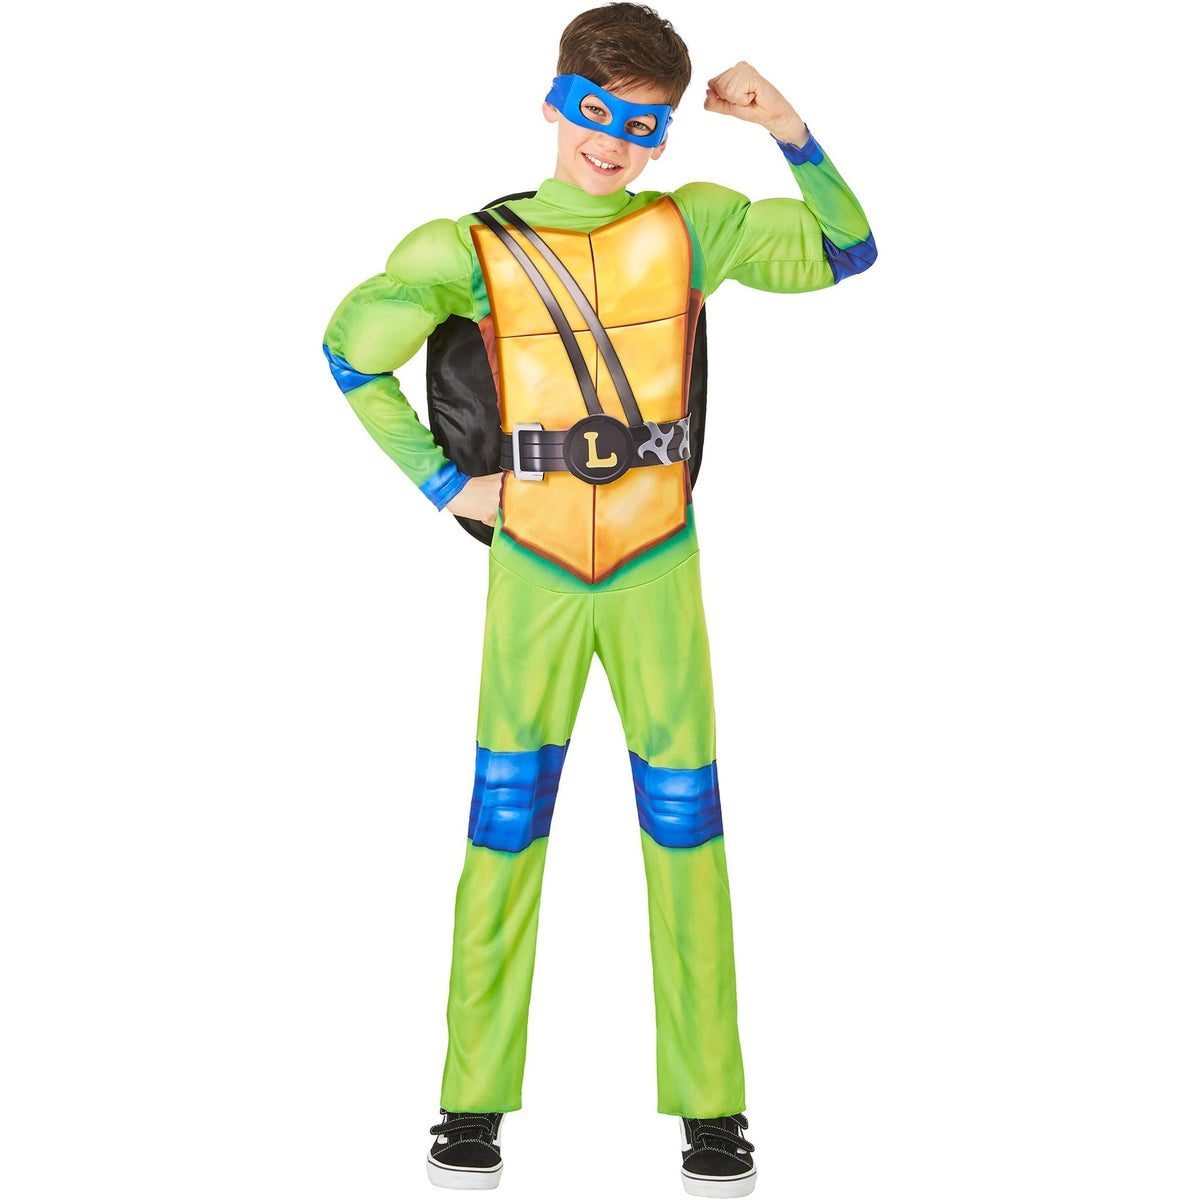 IN SPIRIT DESIGNS Costumes Leo Costume for Kids, Teenage Mutant Ninja Turtles: Mutant Mayhem, Blue and Green Jumpsuit